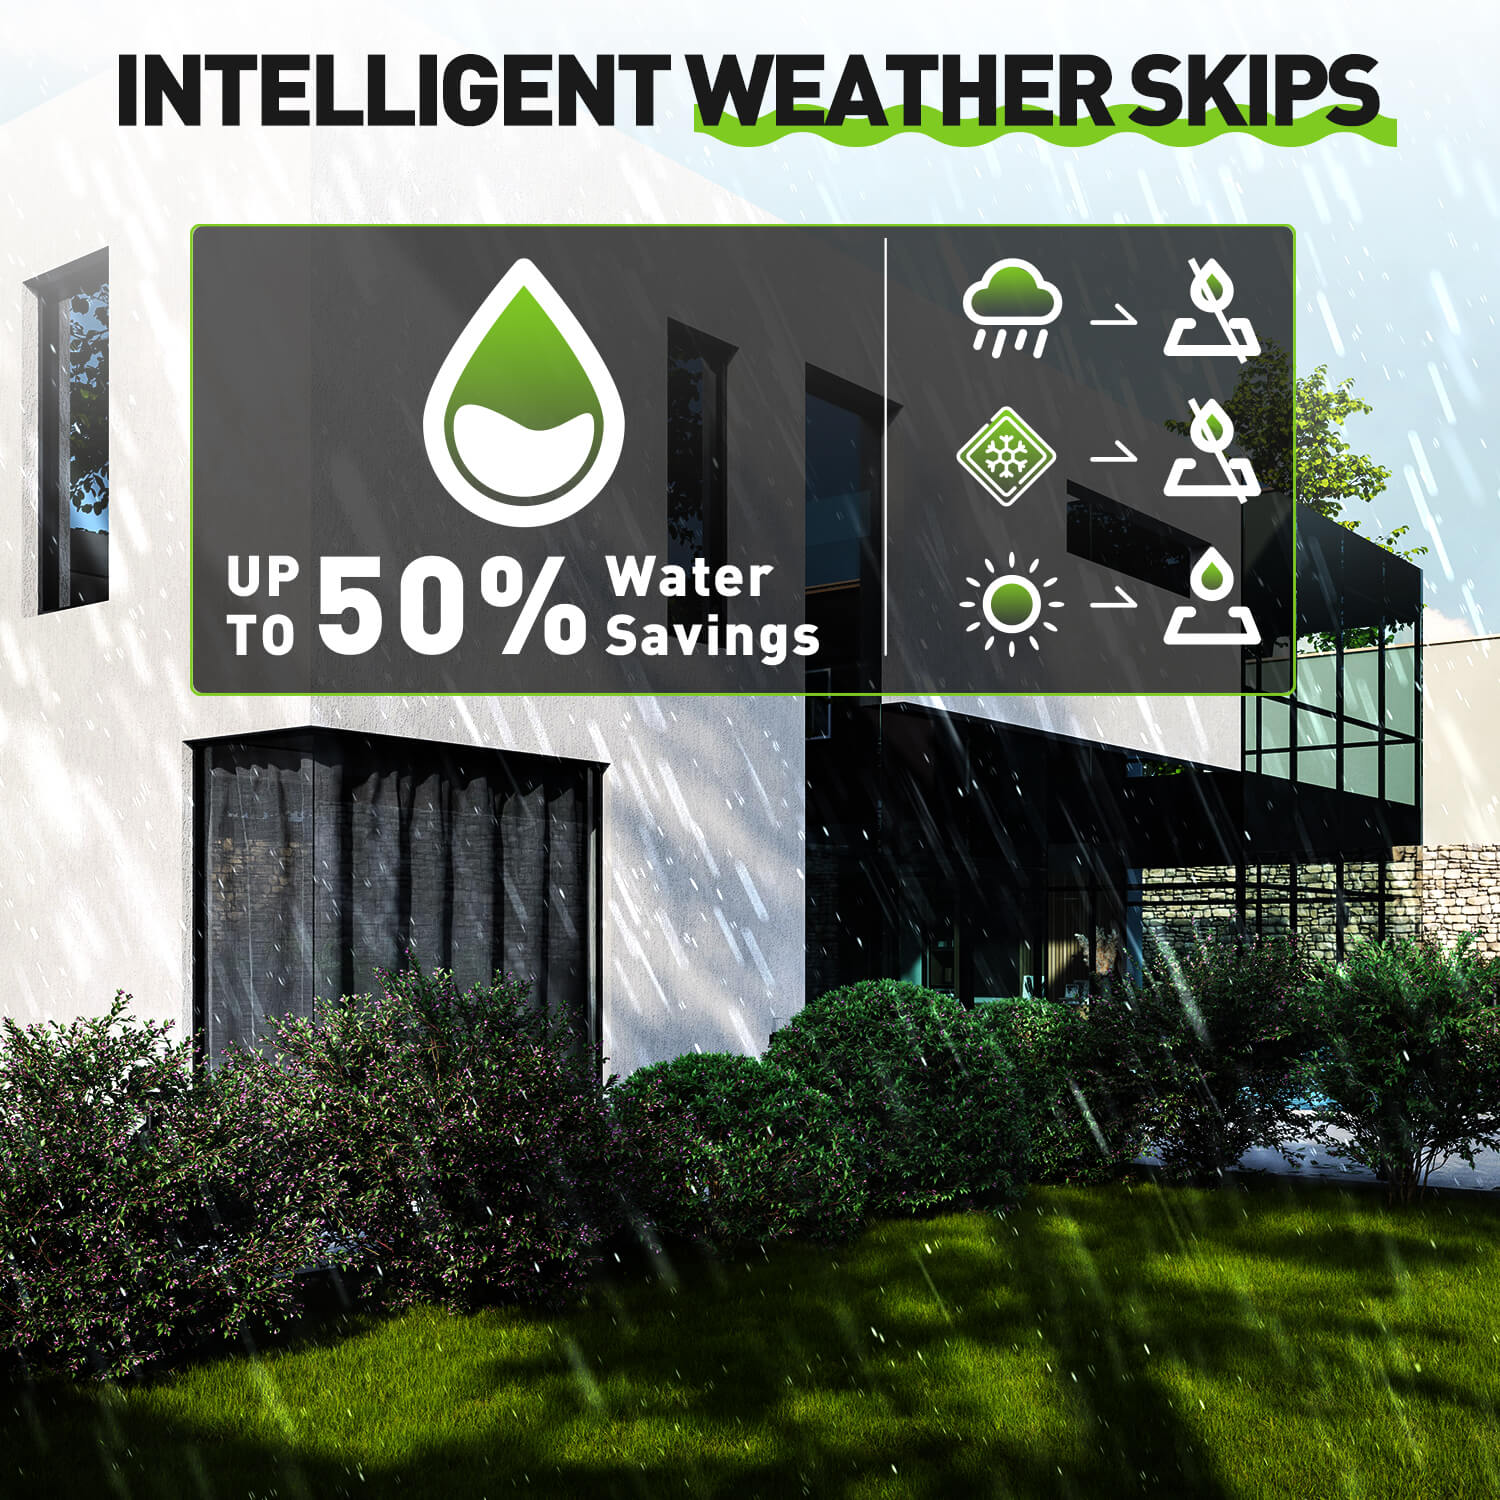 RainPoint 8 Zone Smart Sprinkler Controller, Water Timer Controller for Garden Yard